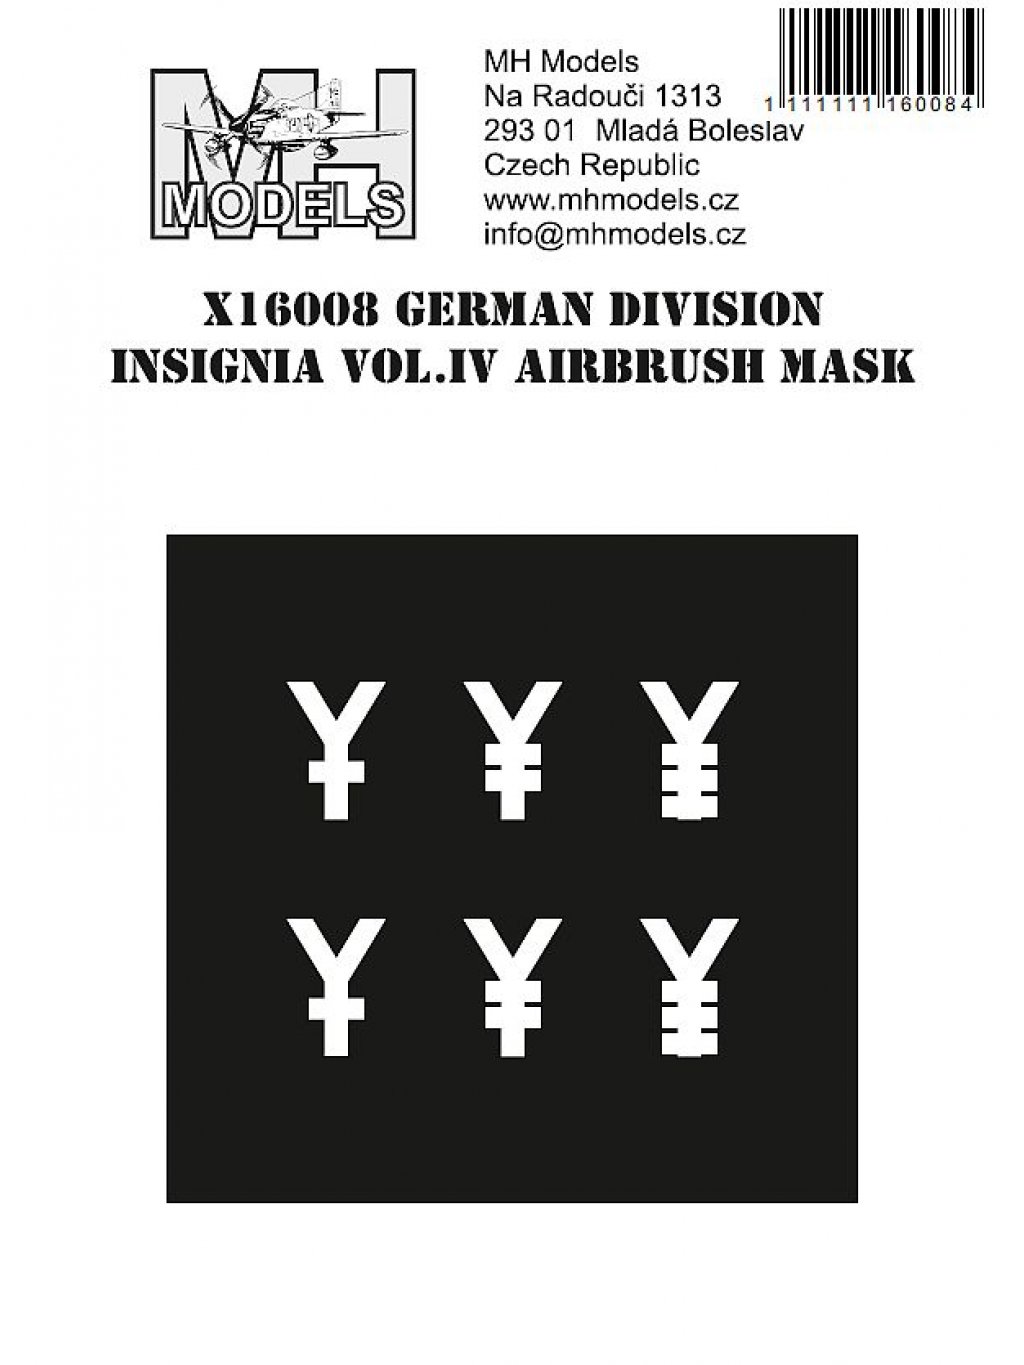 German division insignia vol.IV airbrush mask